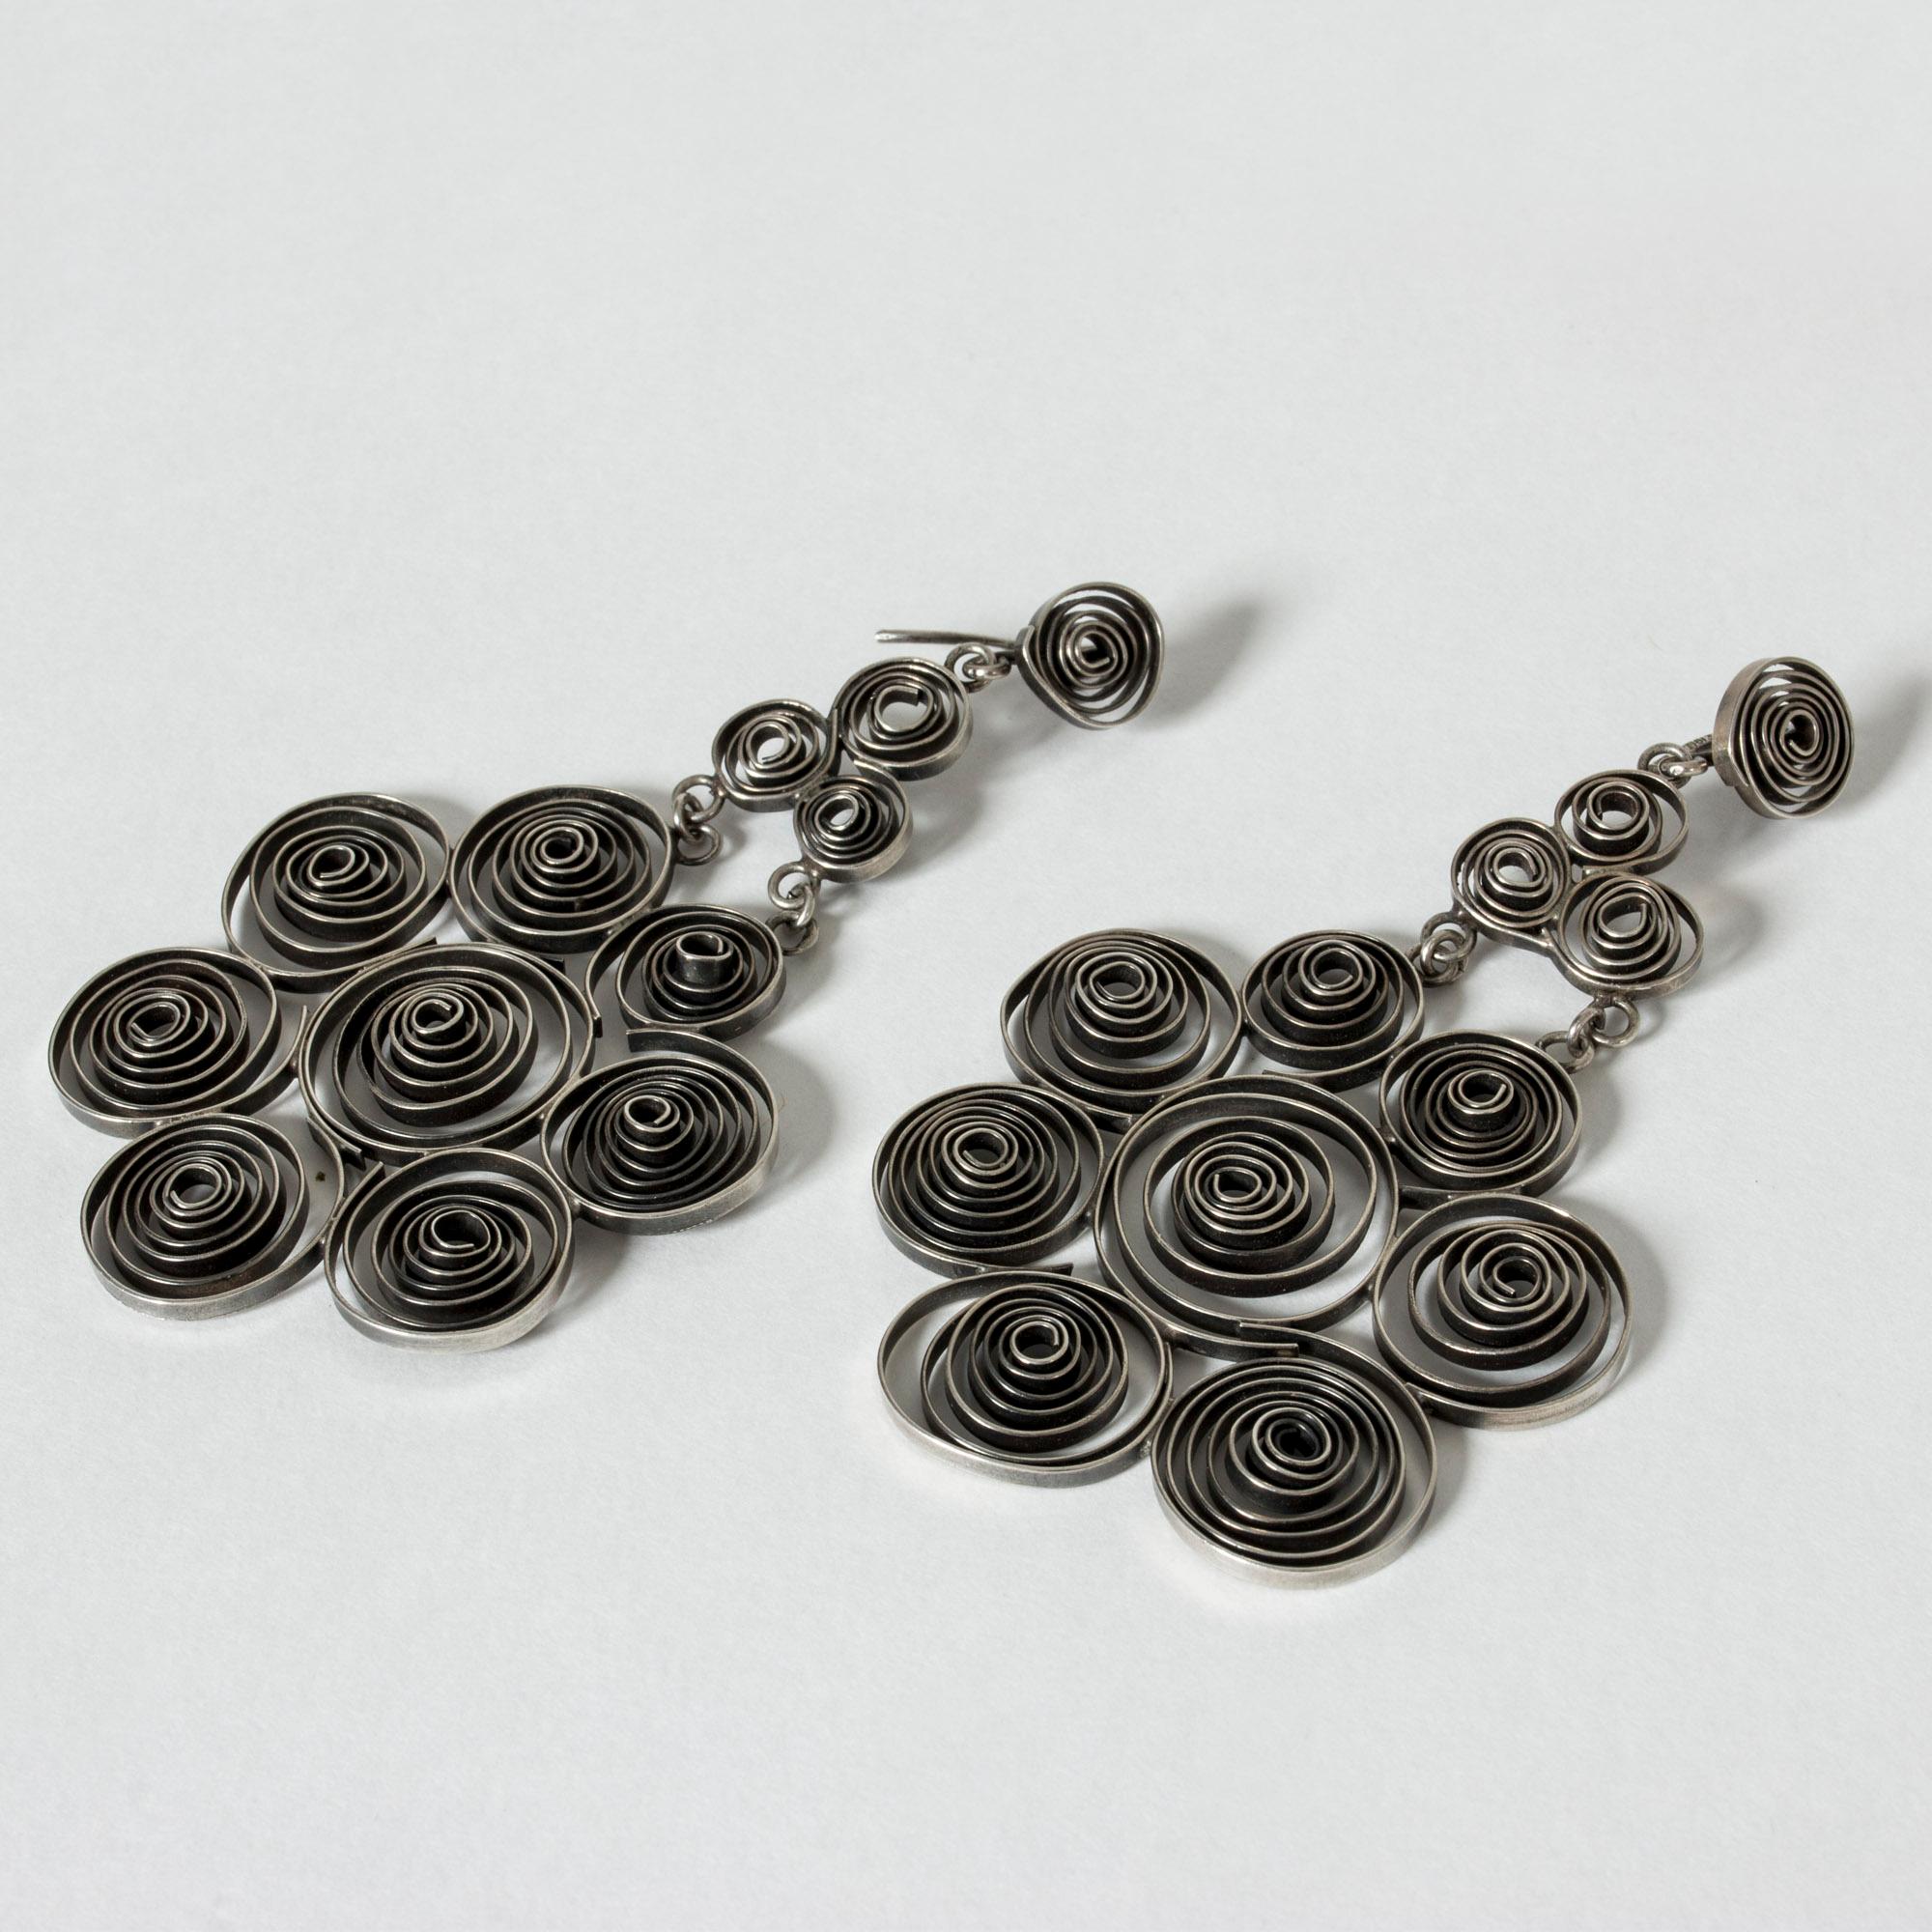 Modernist Pair of Silver “Paw” Earrings by Liisa Vitali, Finland, 1968